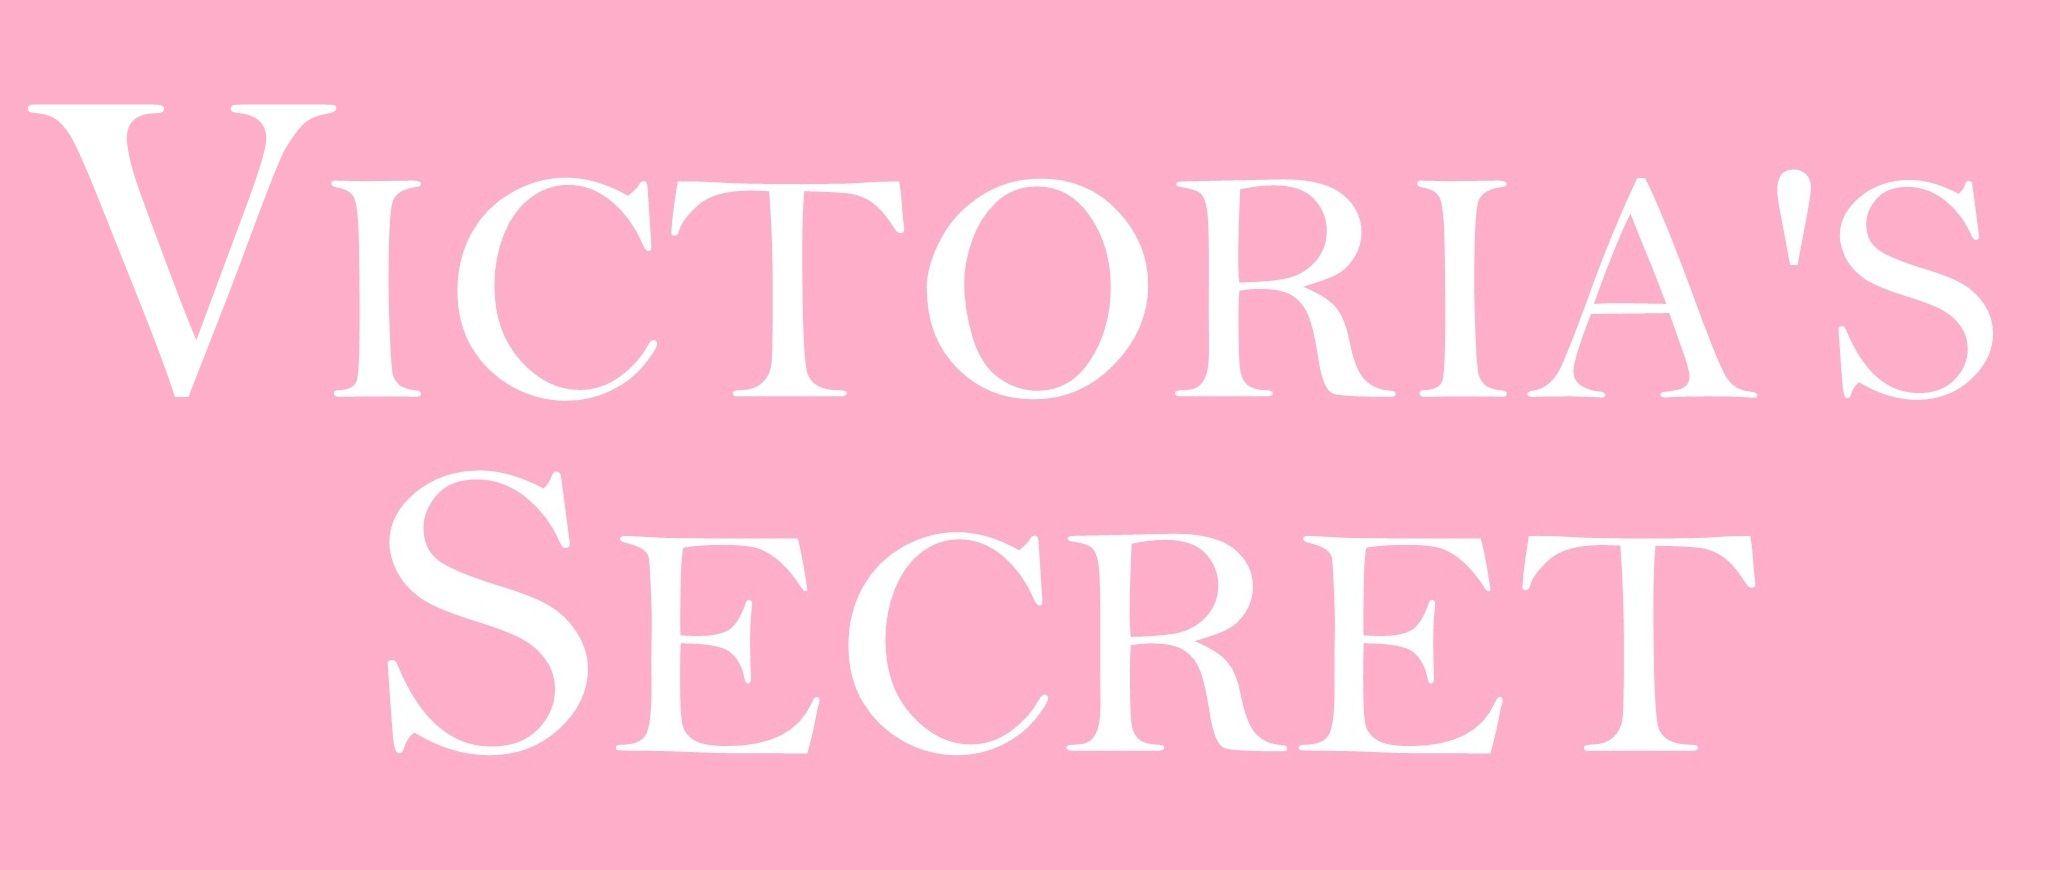 Victoria's Secret Wallpaper Desktop